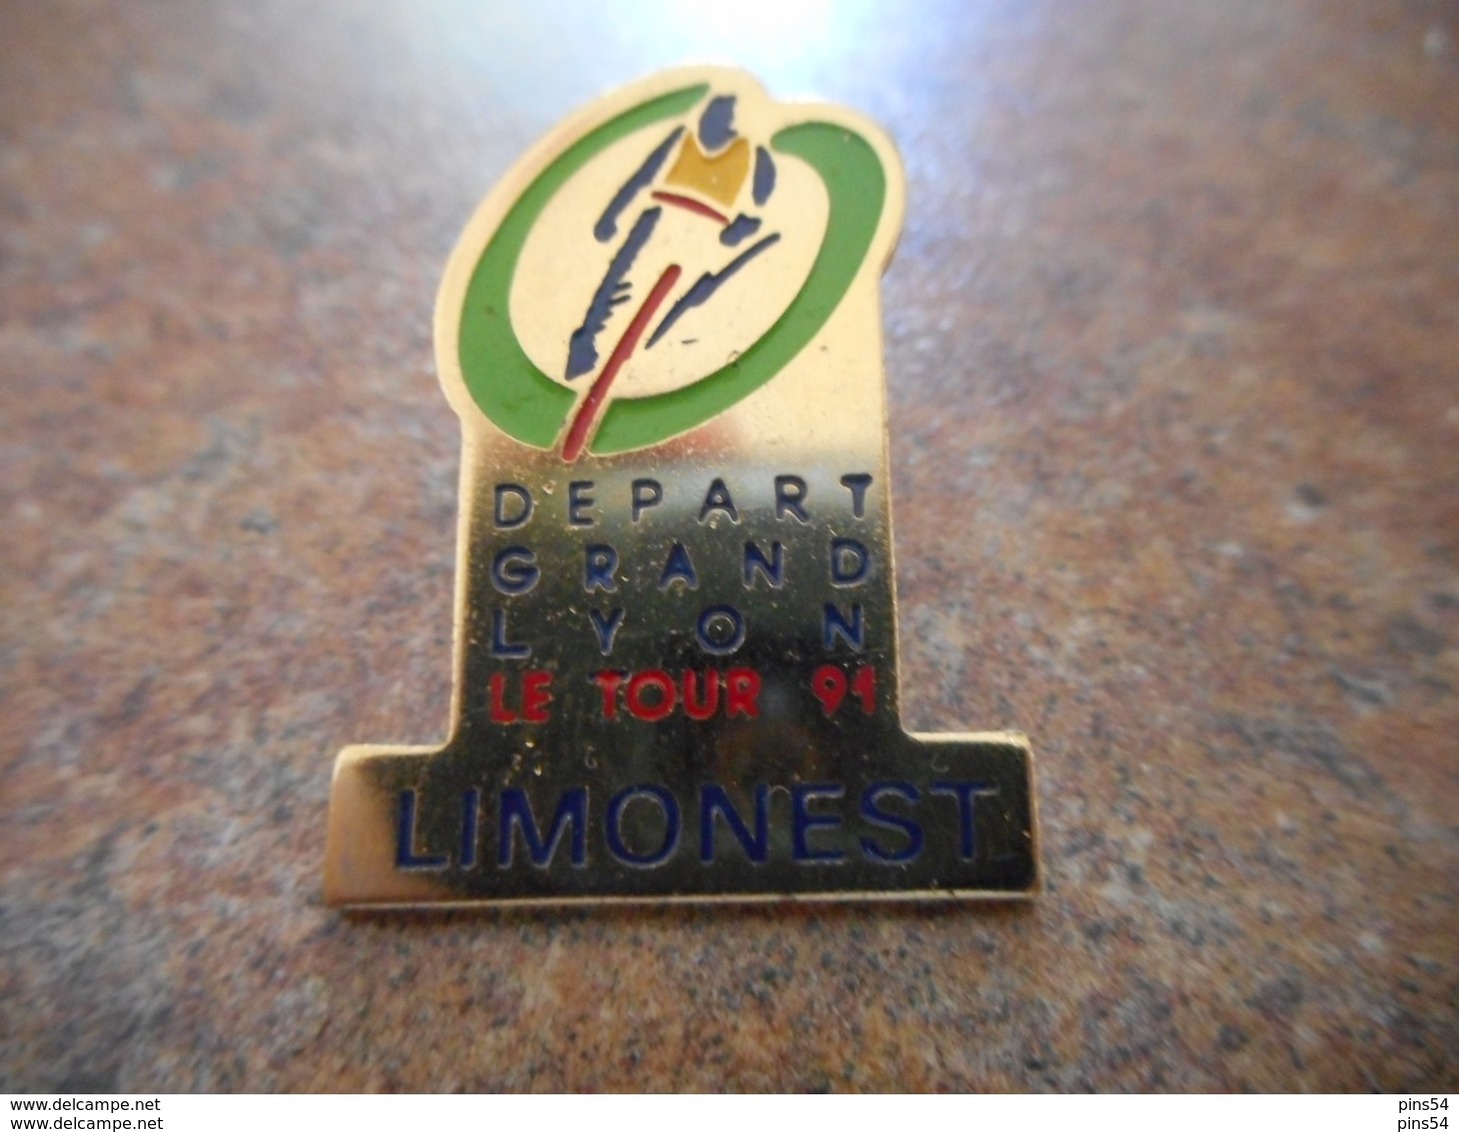 A008 -- Pin's Depart Grand Lyon Le Tour 91 - Limonest - Cyclisme